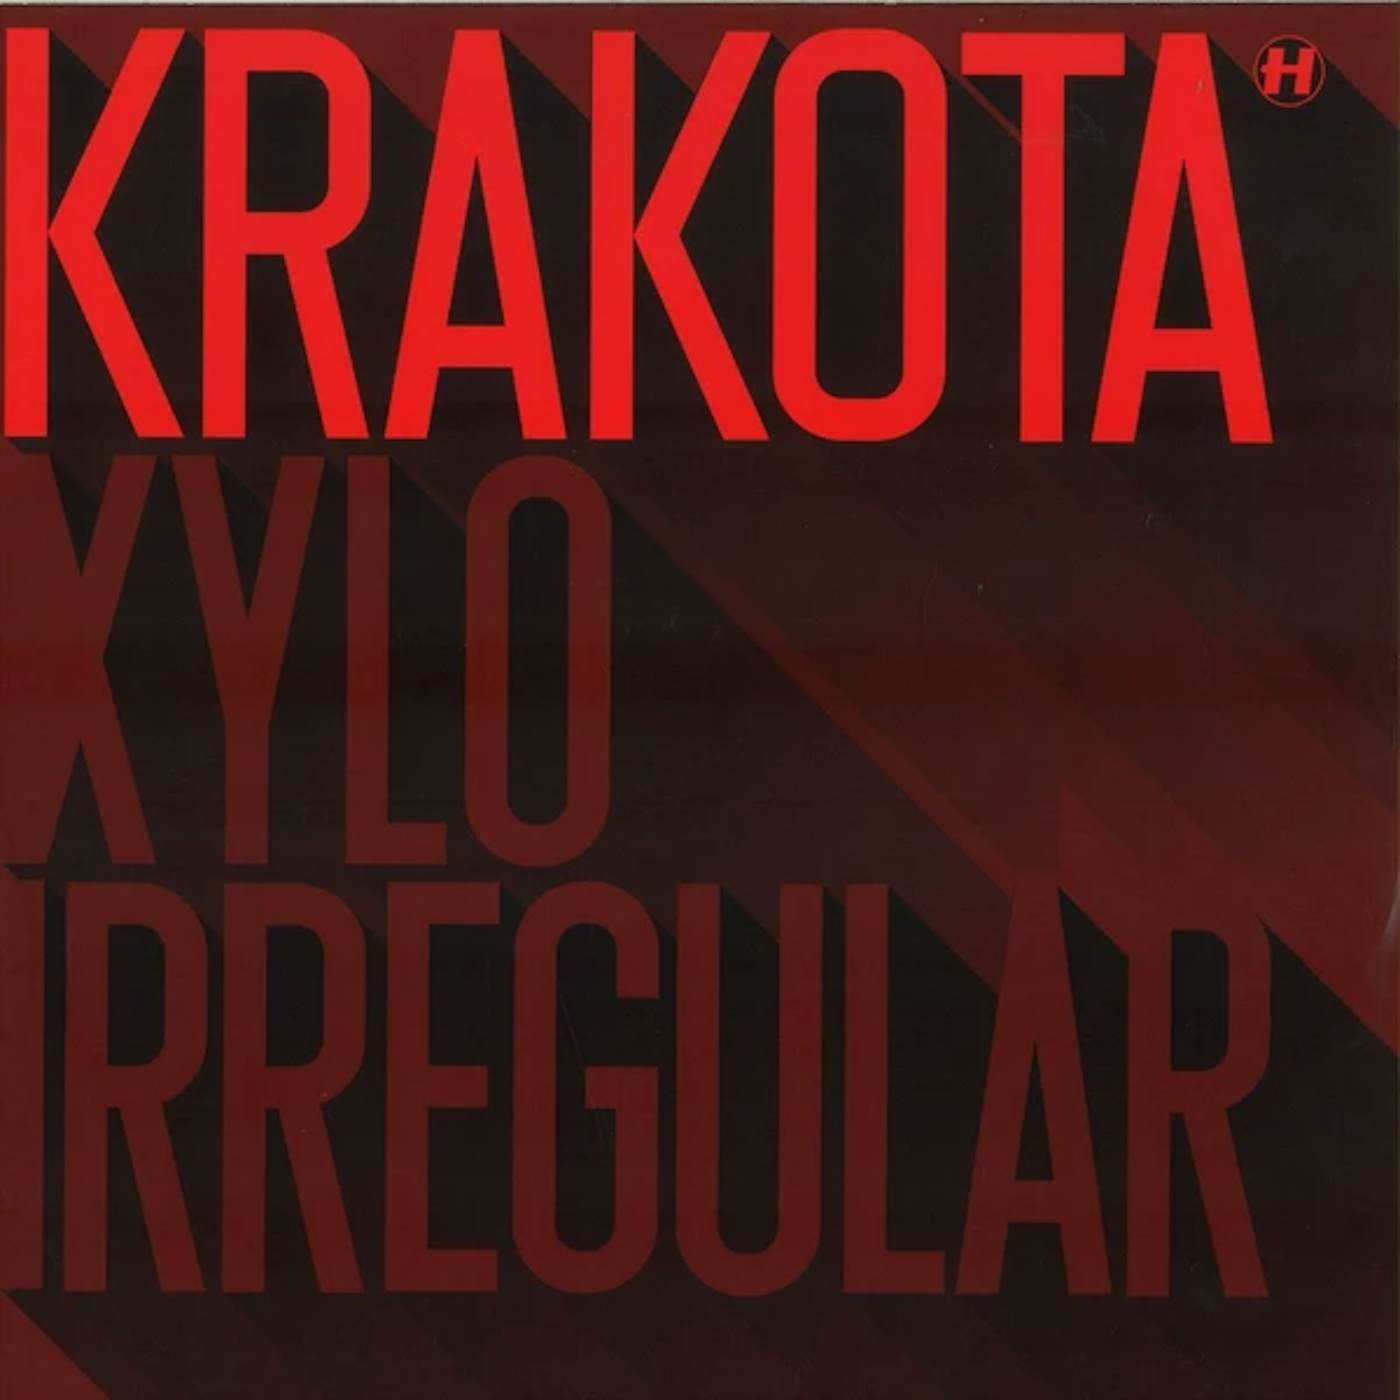 Krakota Xylo / Irregular Vinyl Record